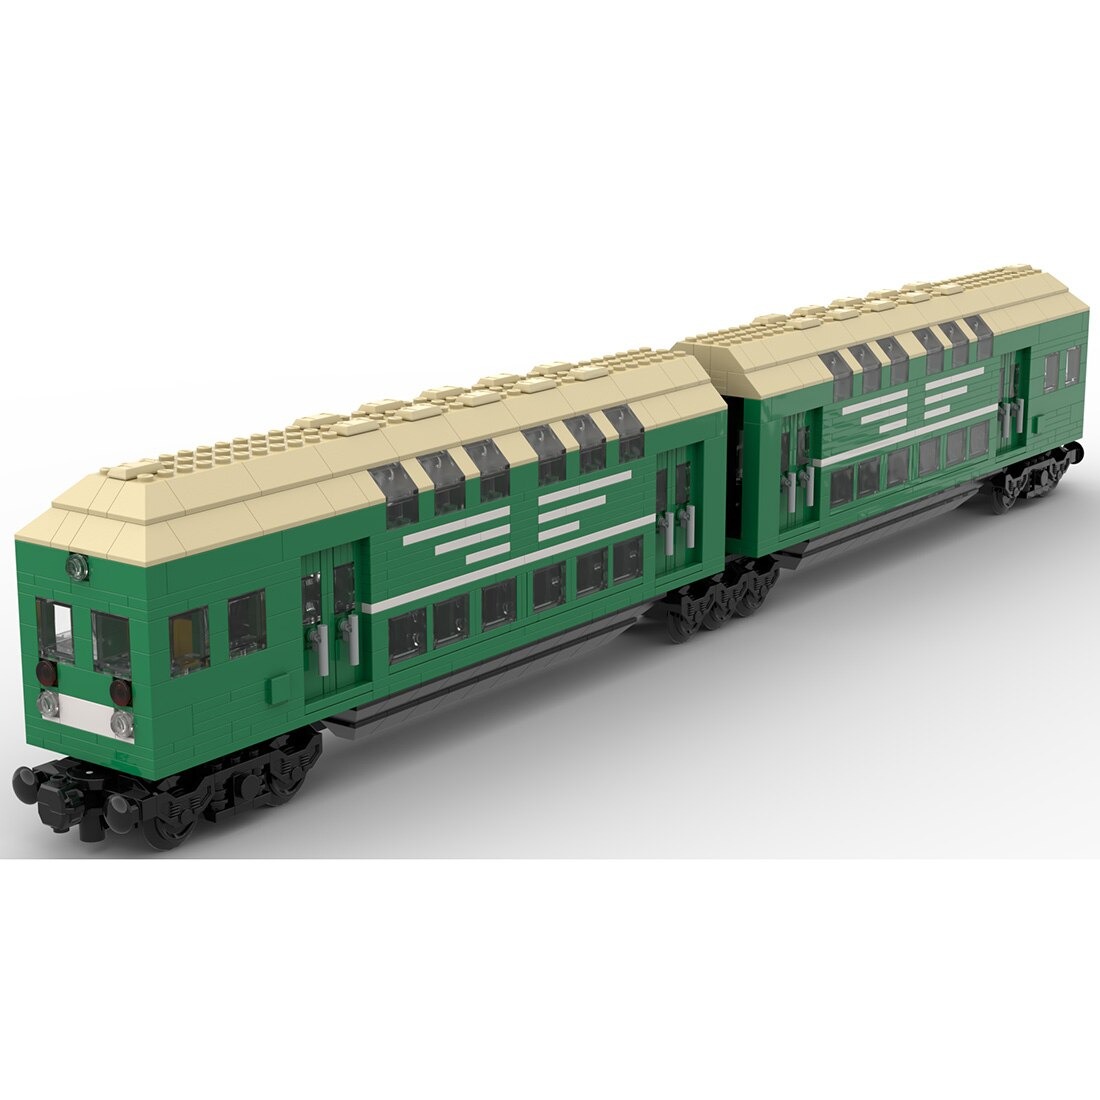 authorized moc 109281 7 axle train carri main 5 2 - KAZI Block